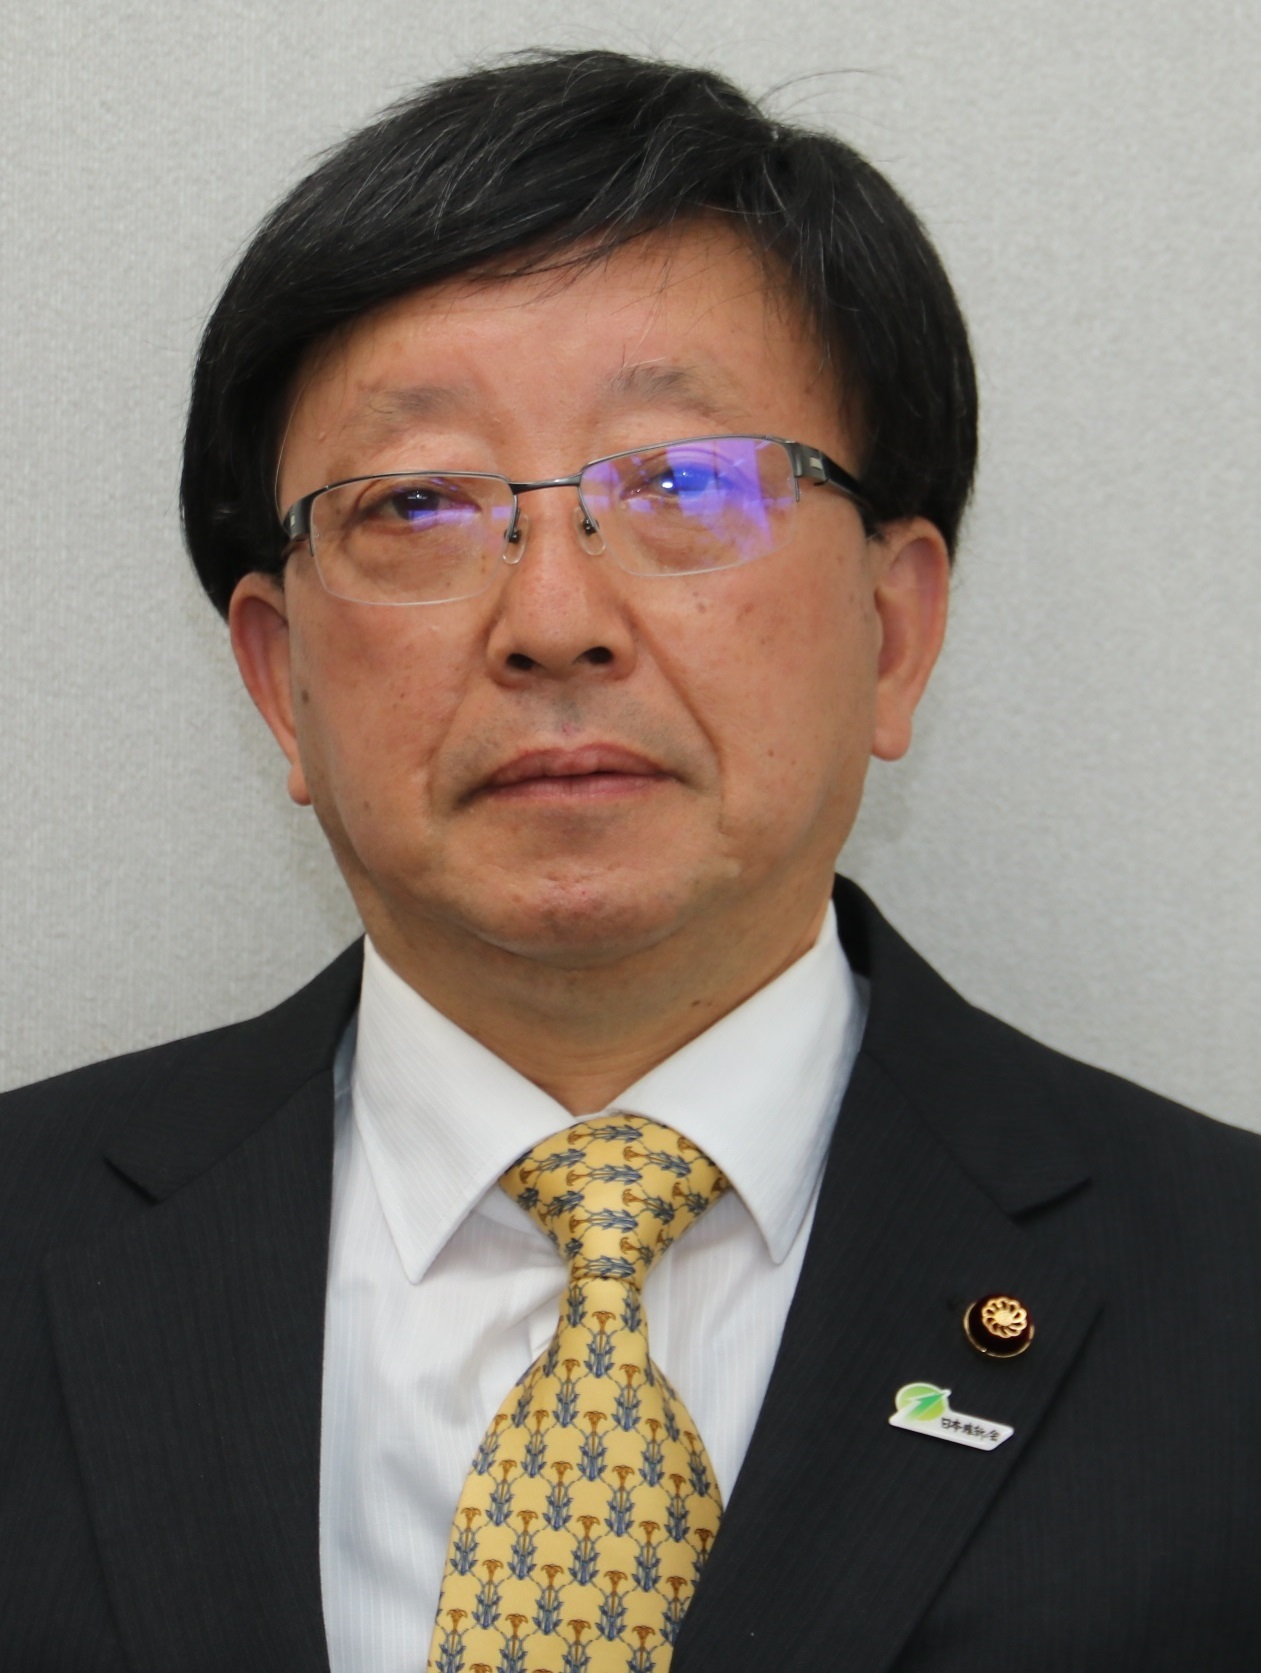 早川由紀夫議員の顔写真